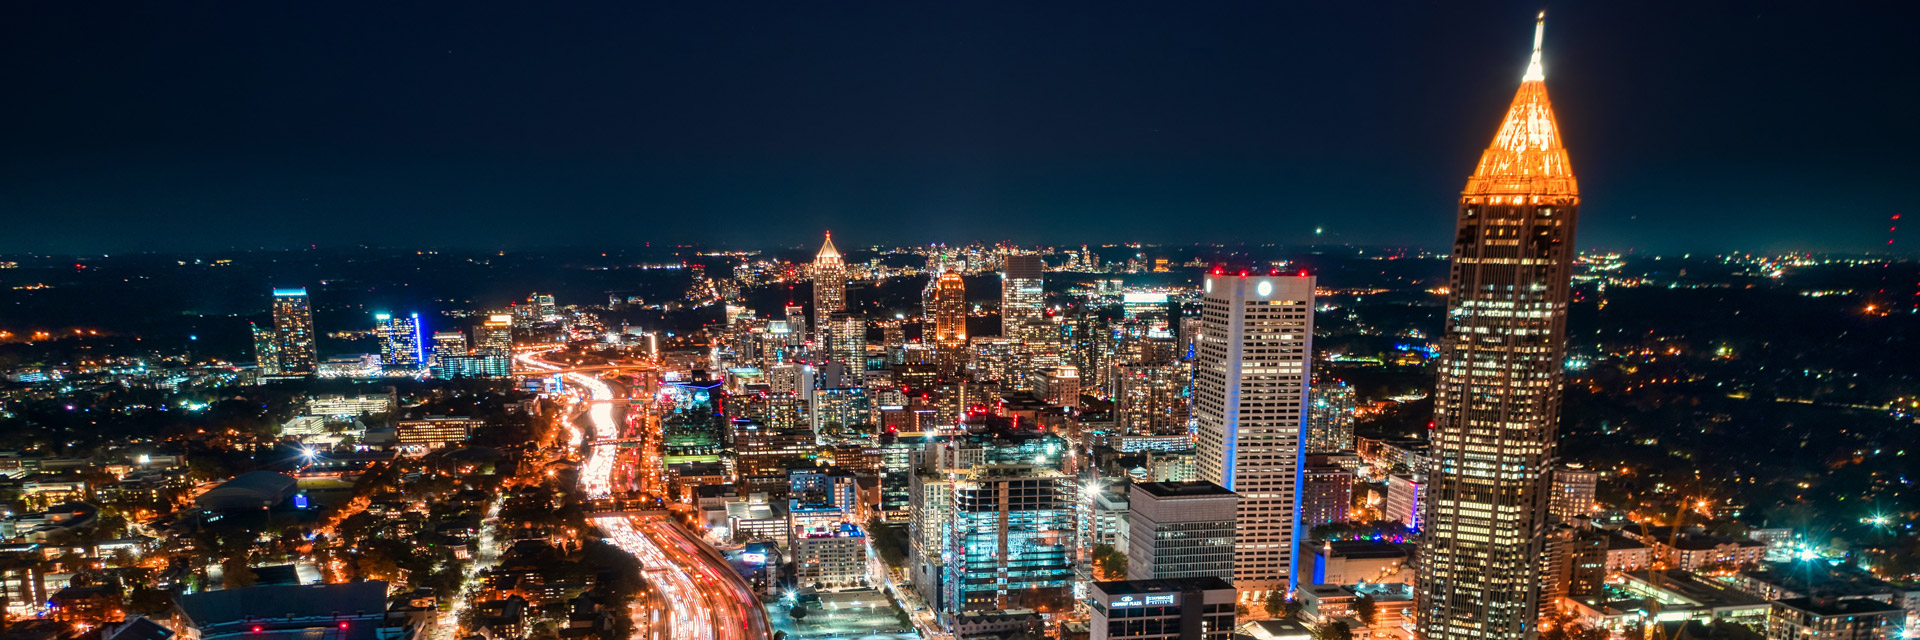 View of the Atlanta city skyline at night.